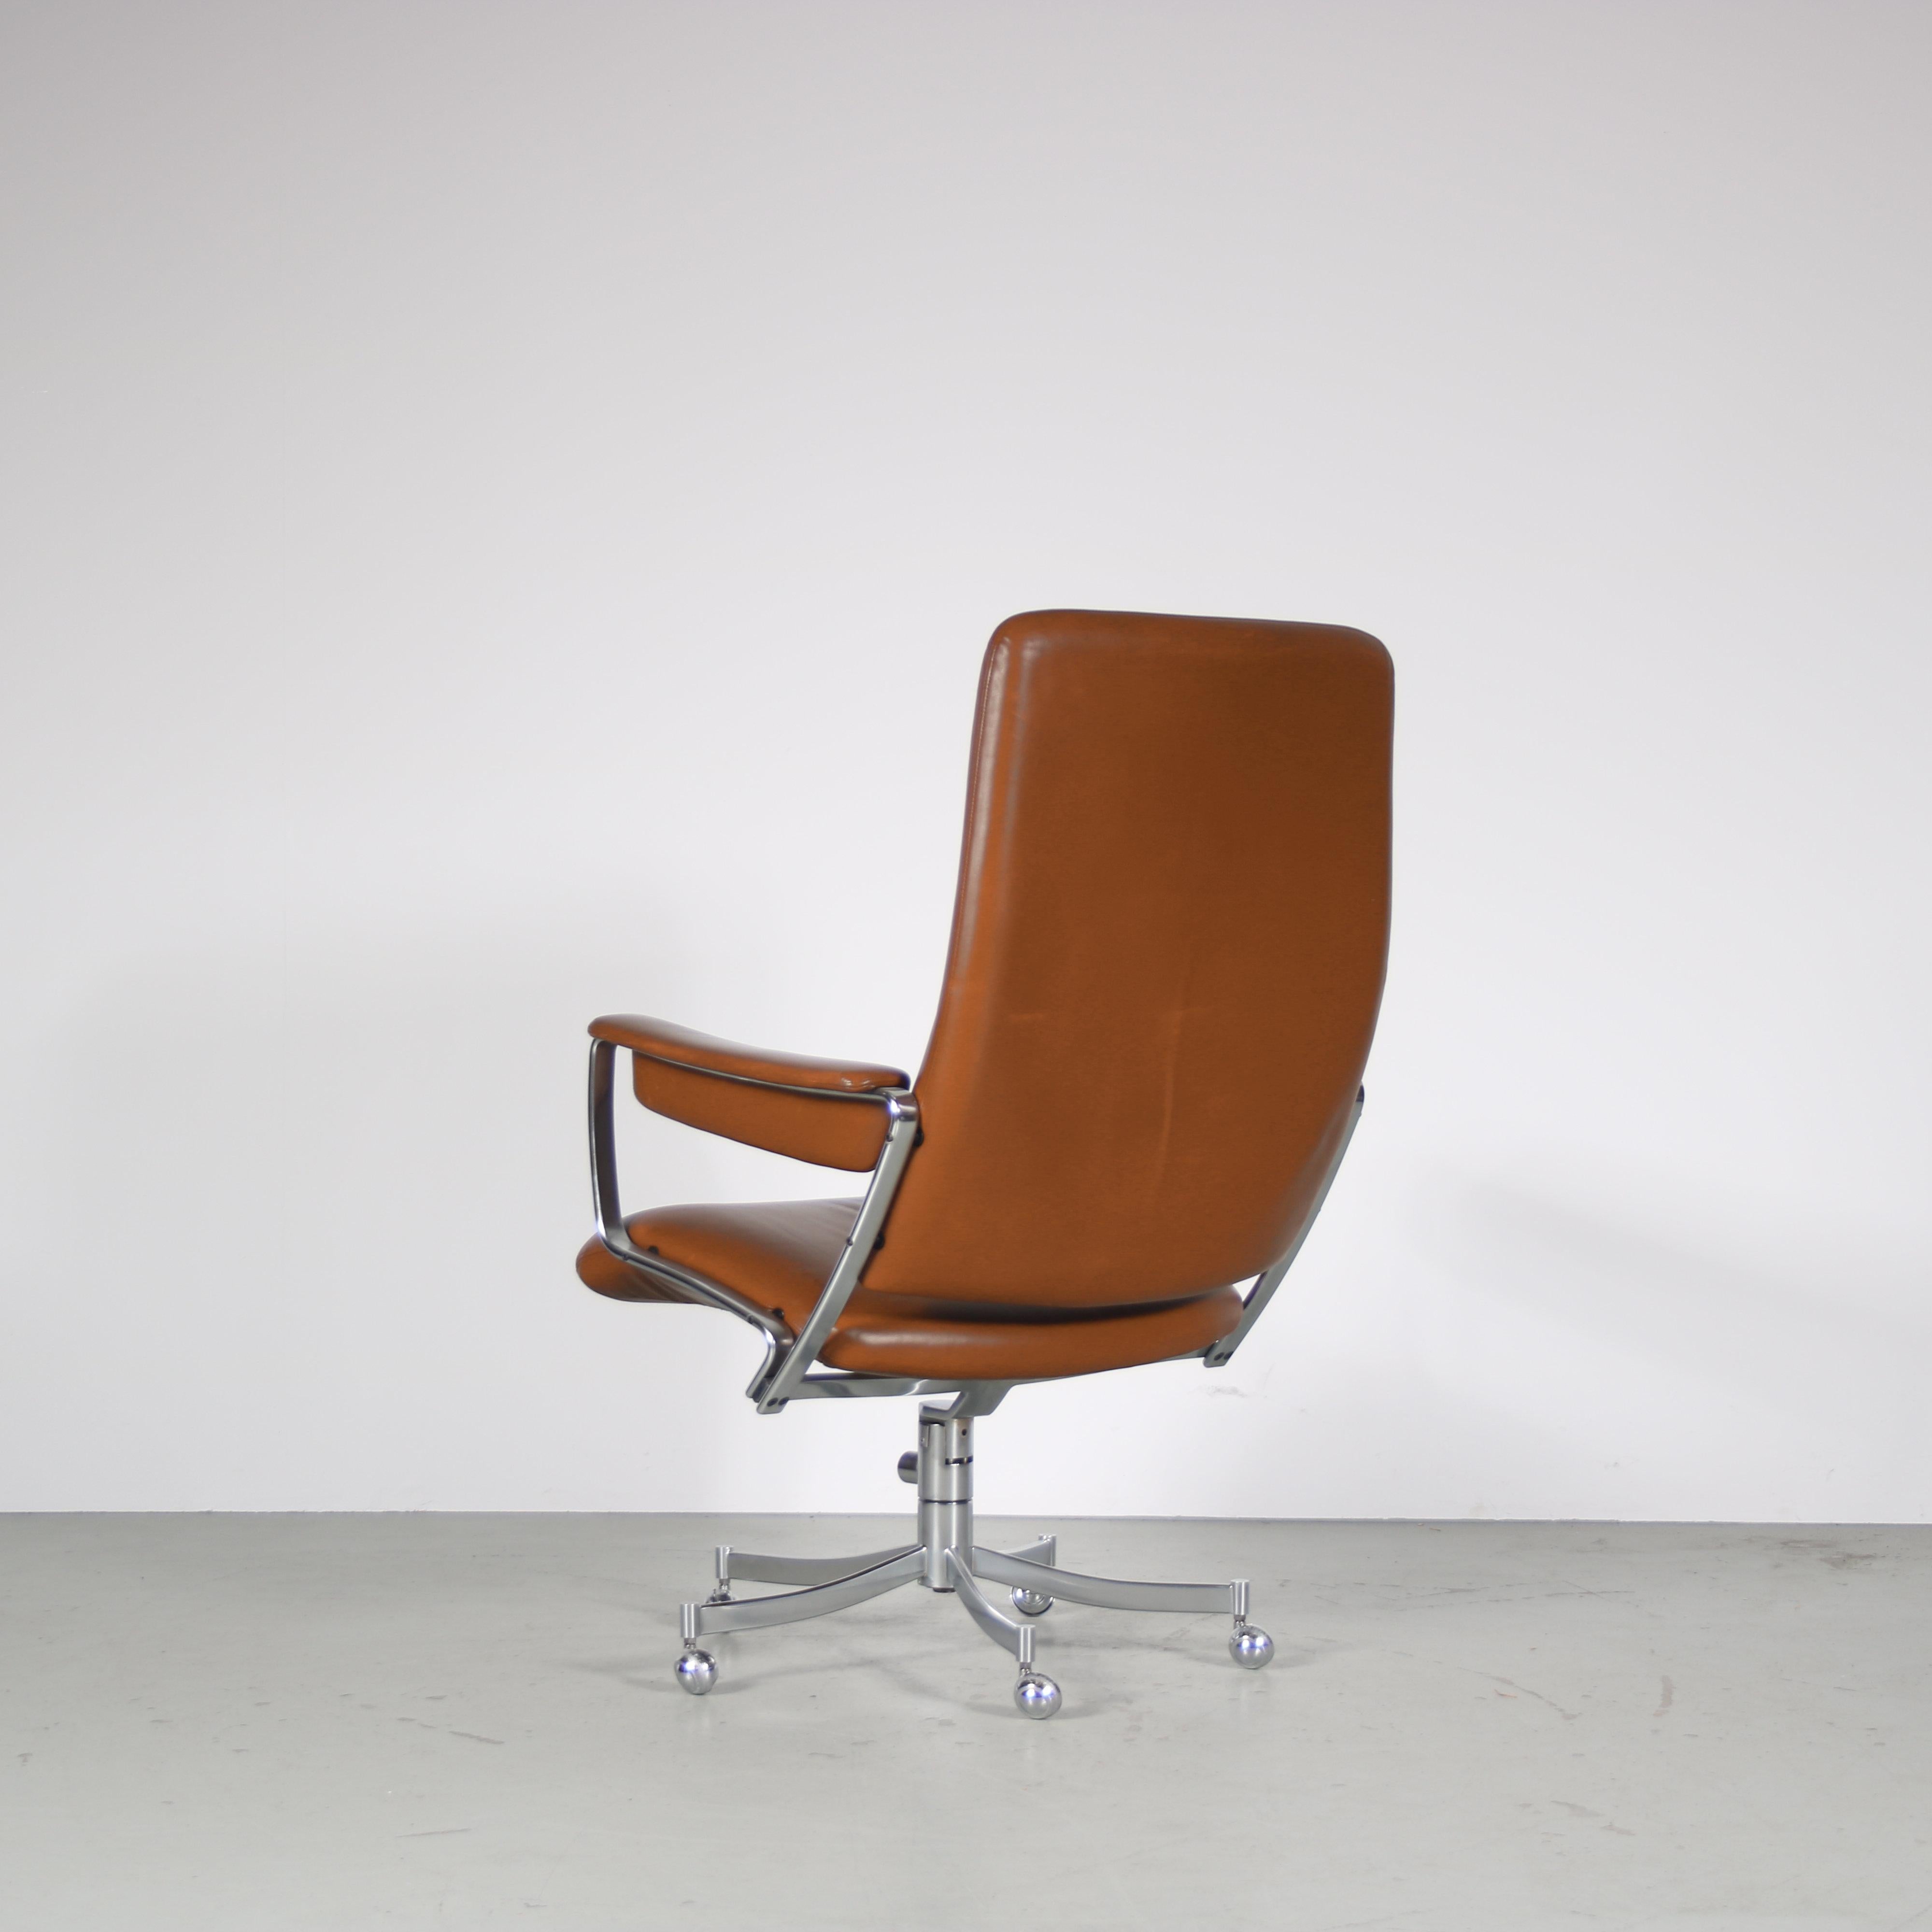 Metal Jorgen Kastholm “JK760” Desk Chair for Kill International, Germany 1970